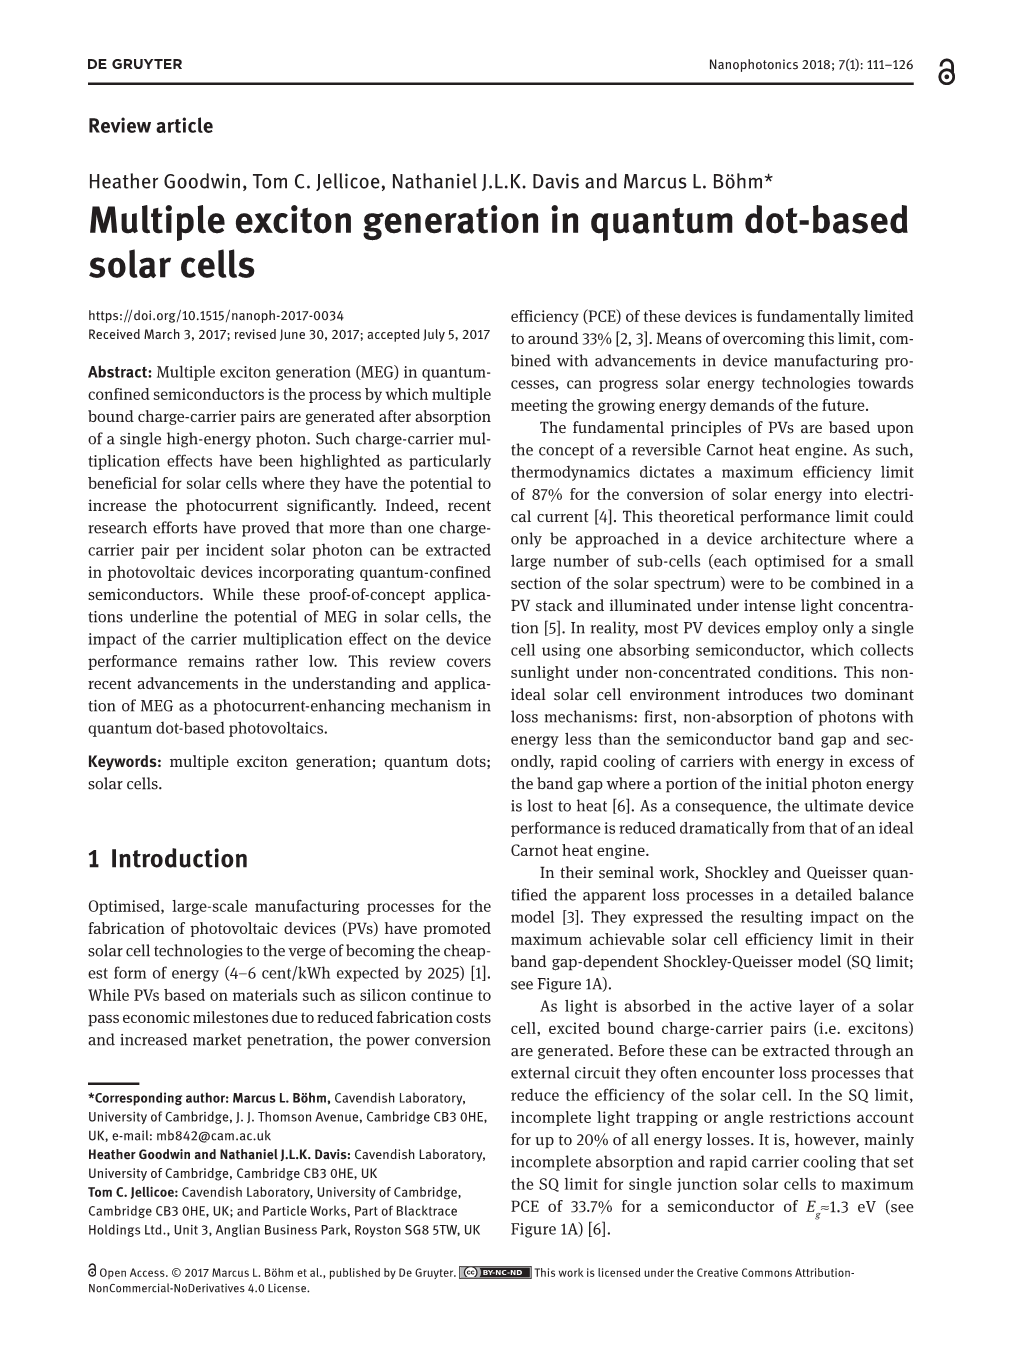 Multiple Exciton Generation in Quantum Dot-Based Solar Cells